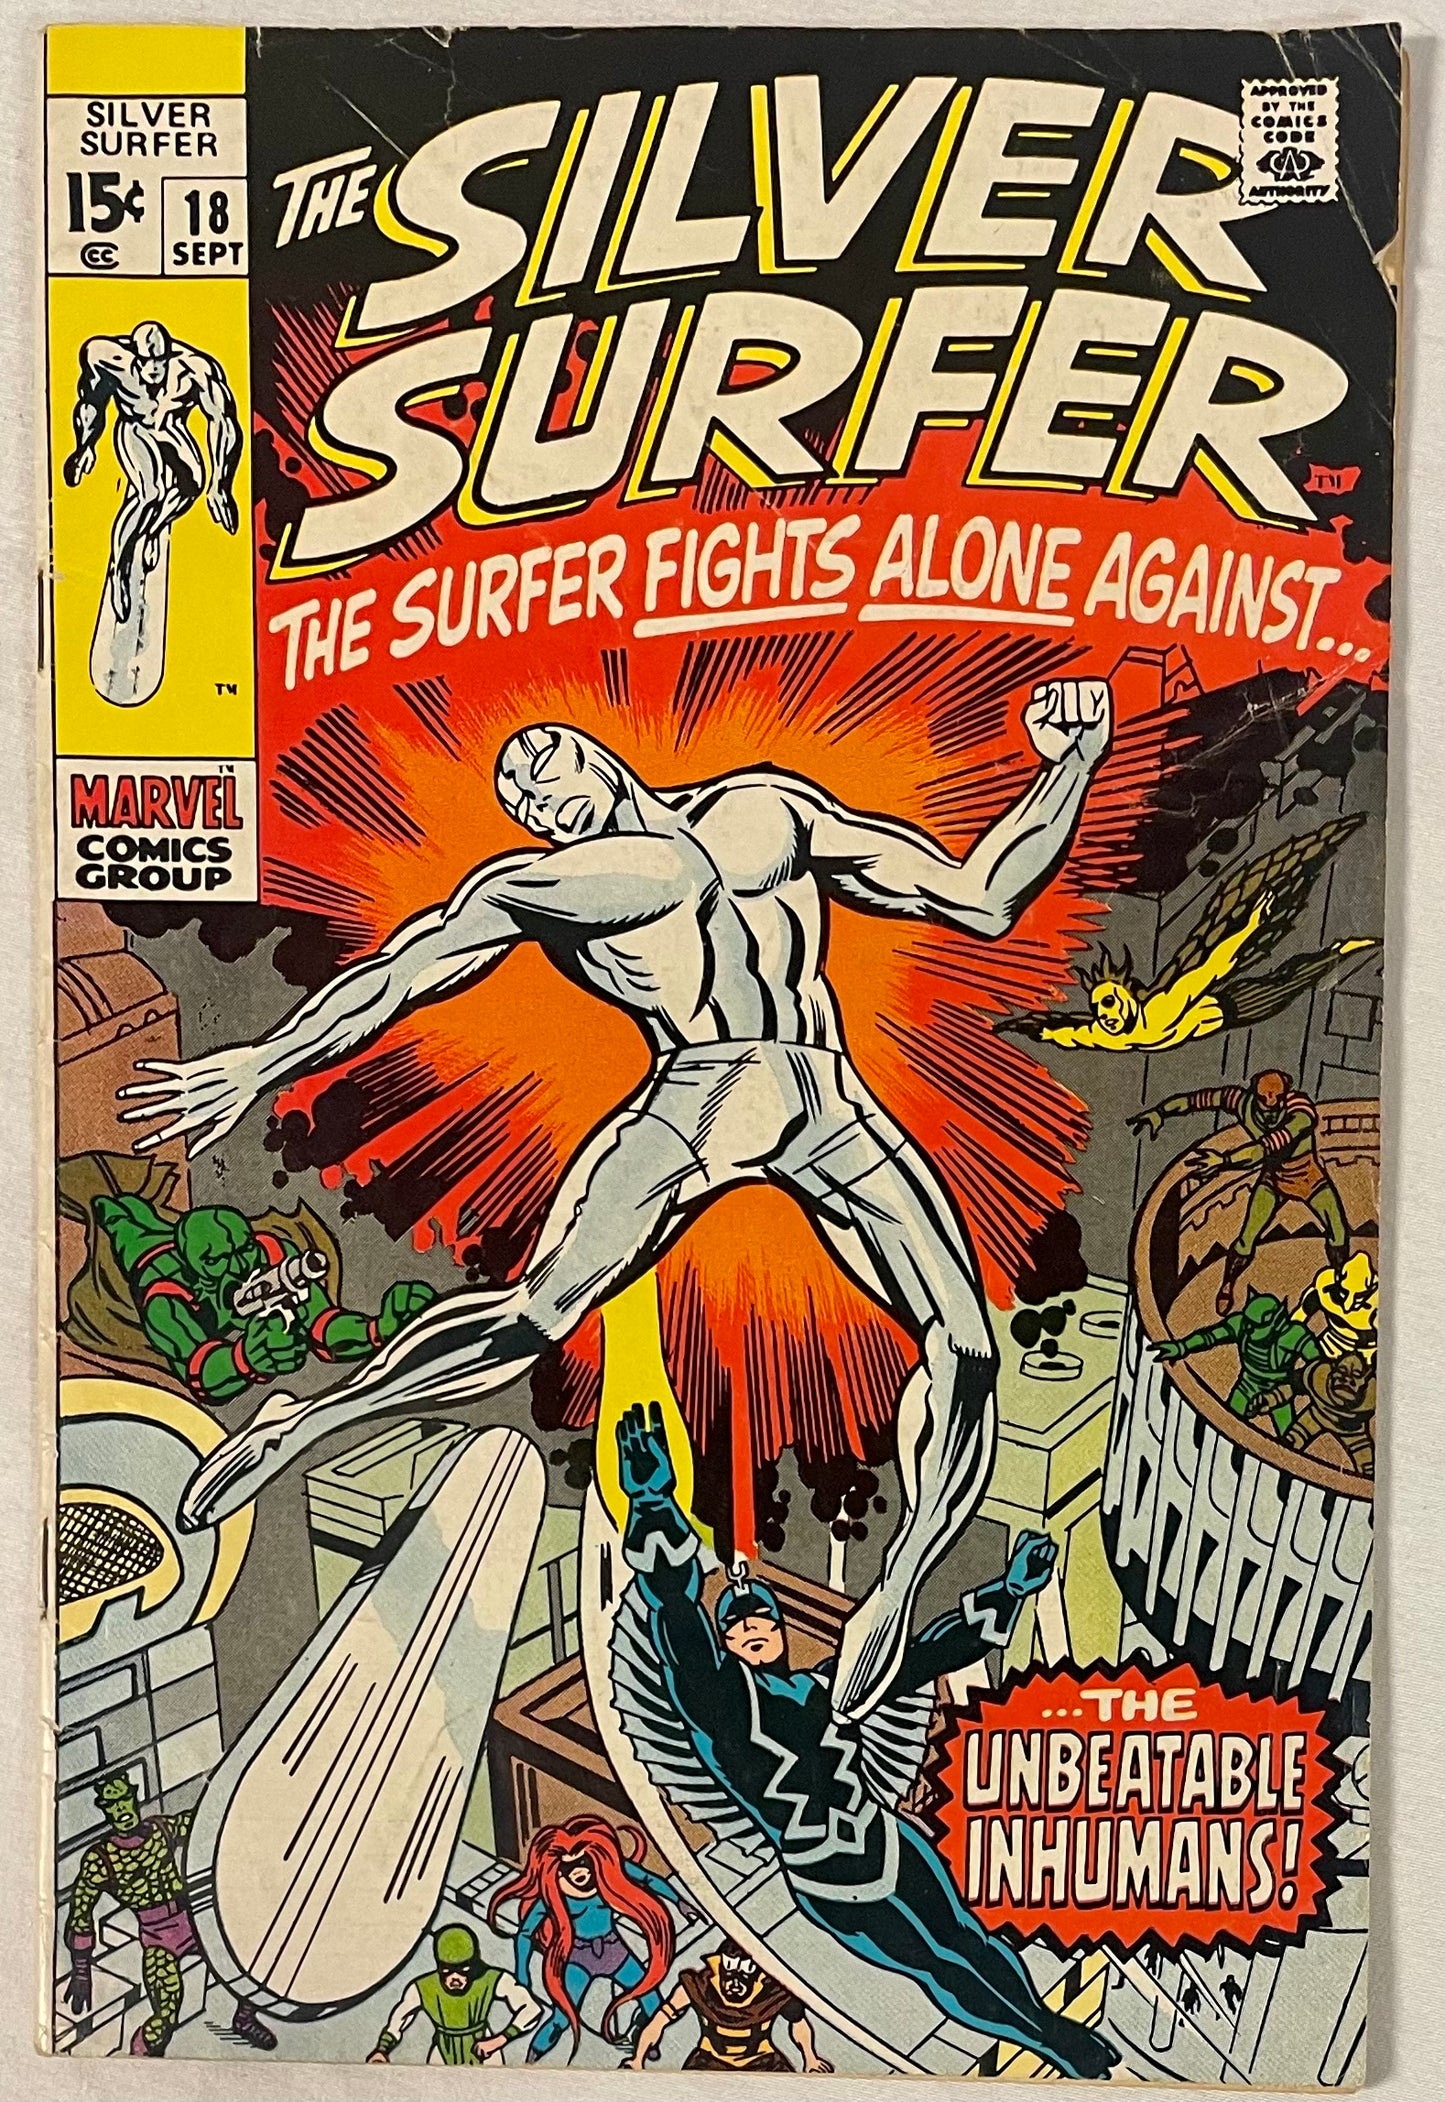 Marvel Comics The Silver Surfer #18